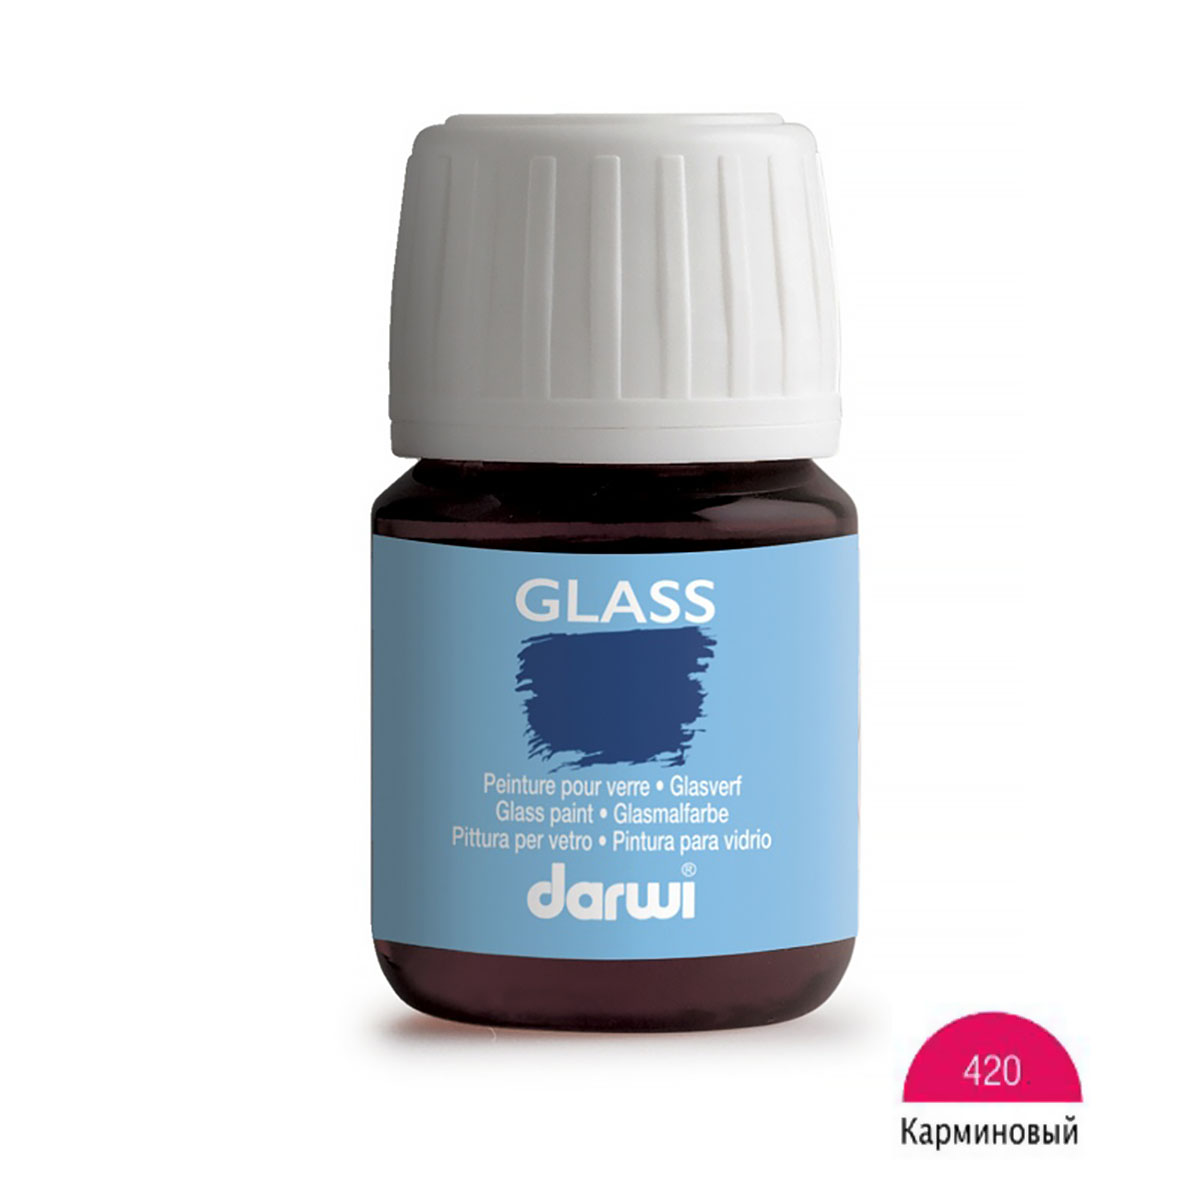 Краска для стекла Darwi GLASS, 30мл, 420 карминовый, DA0700030